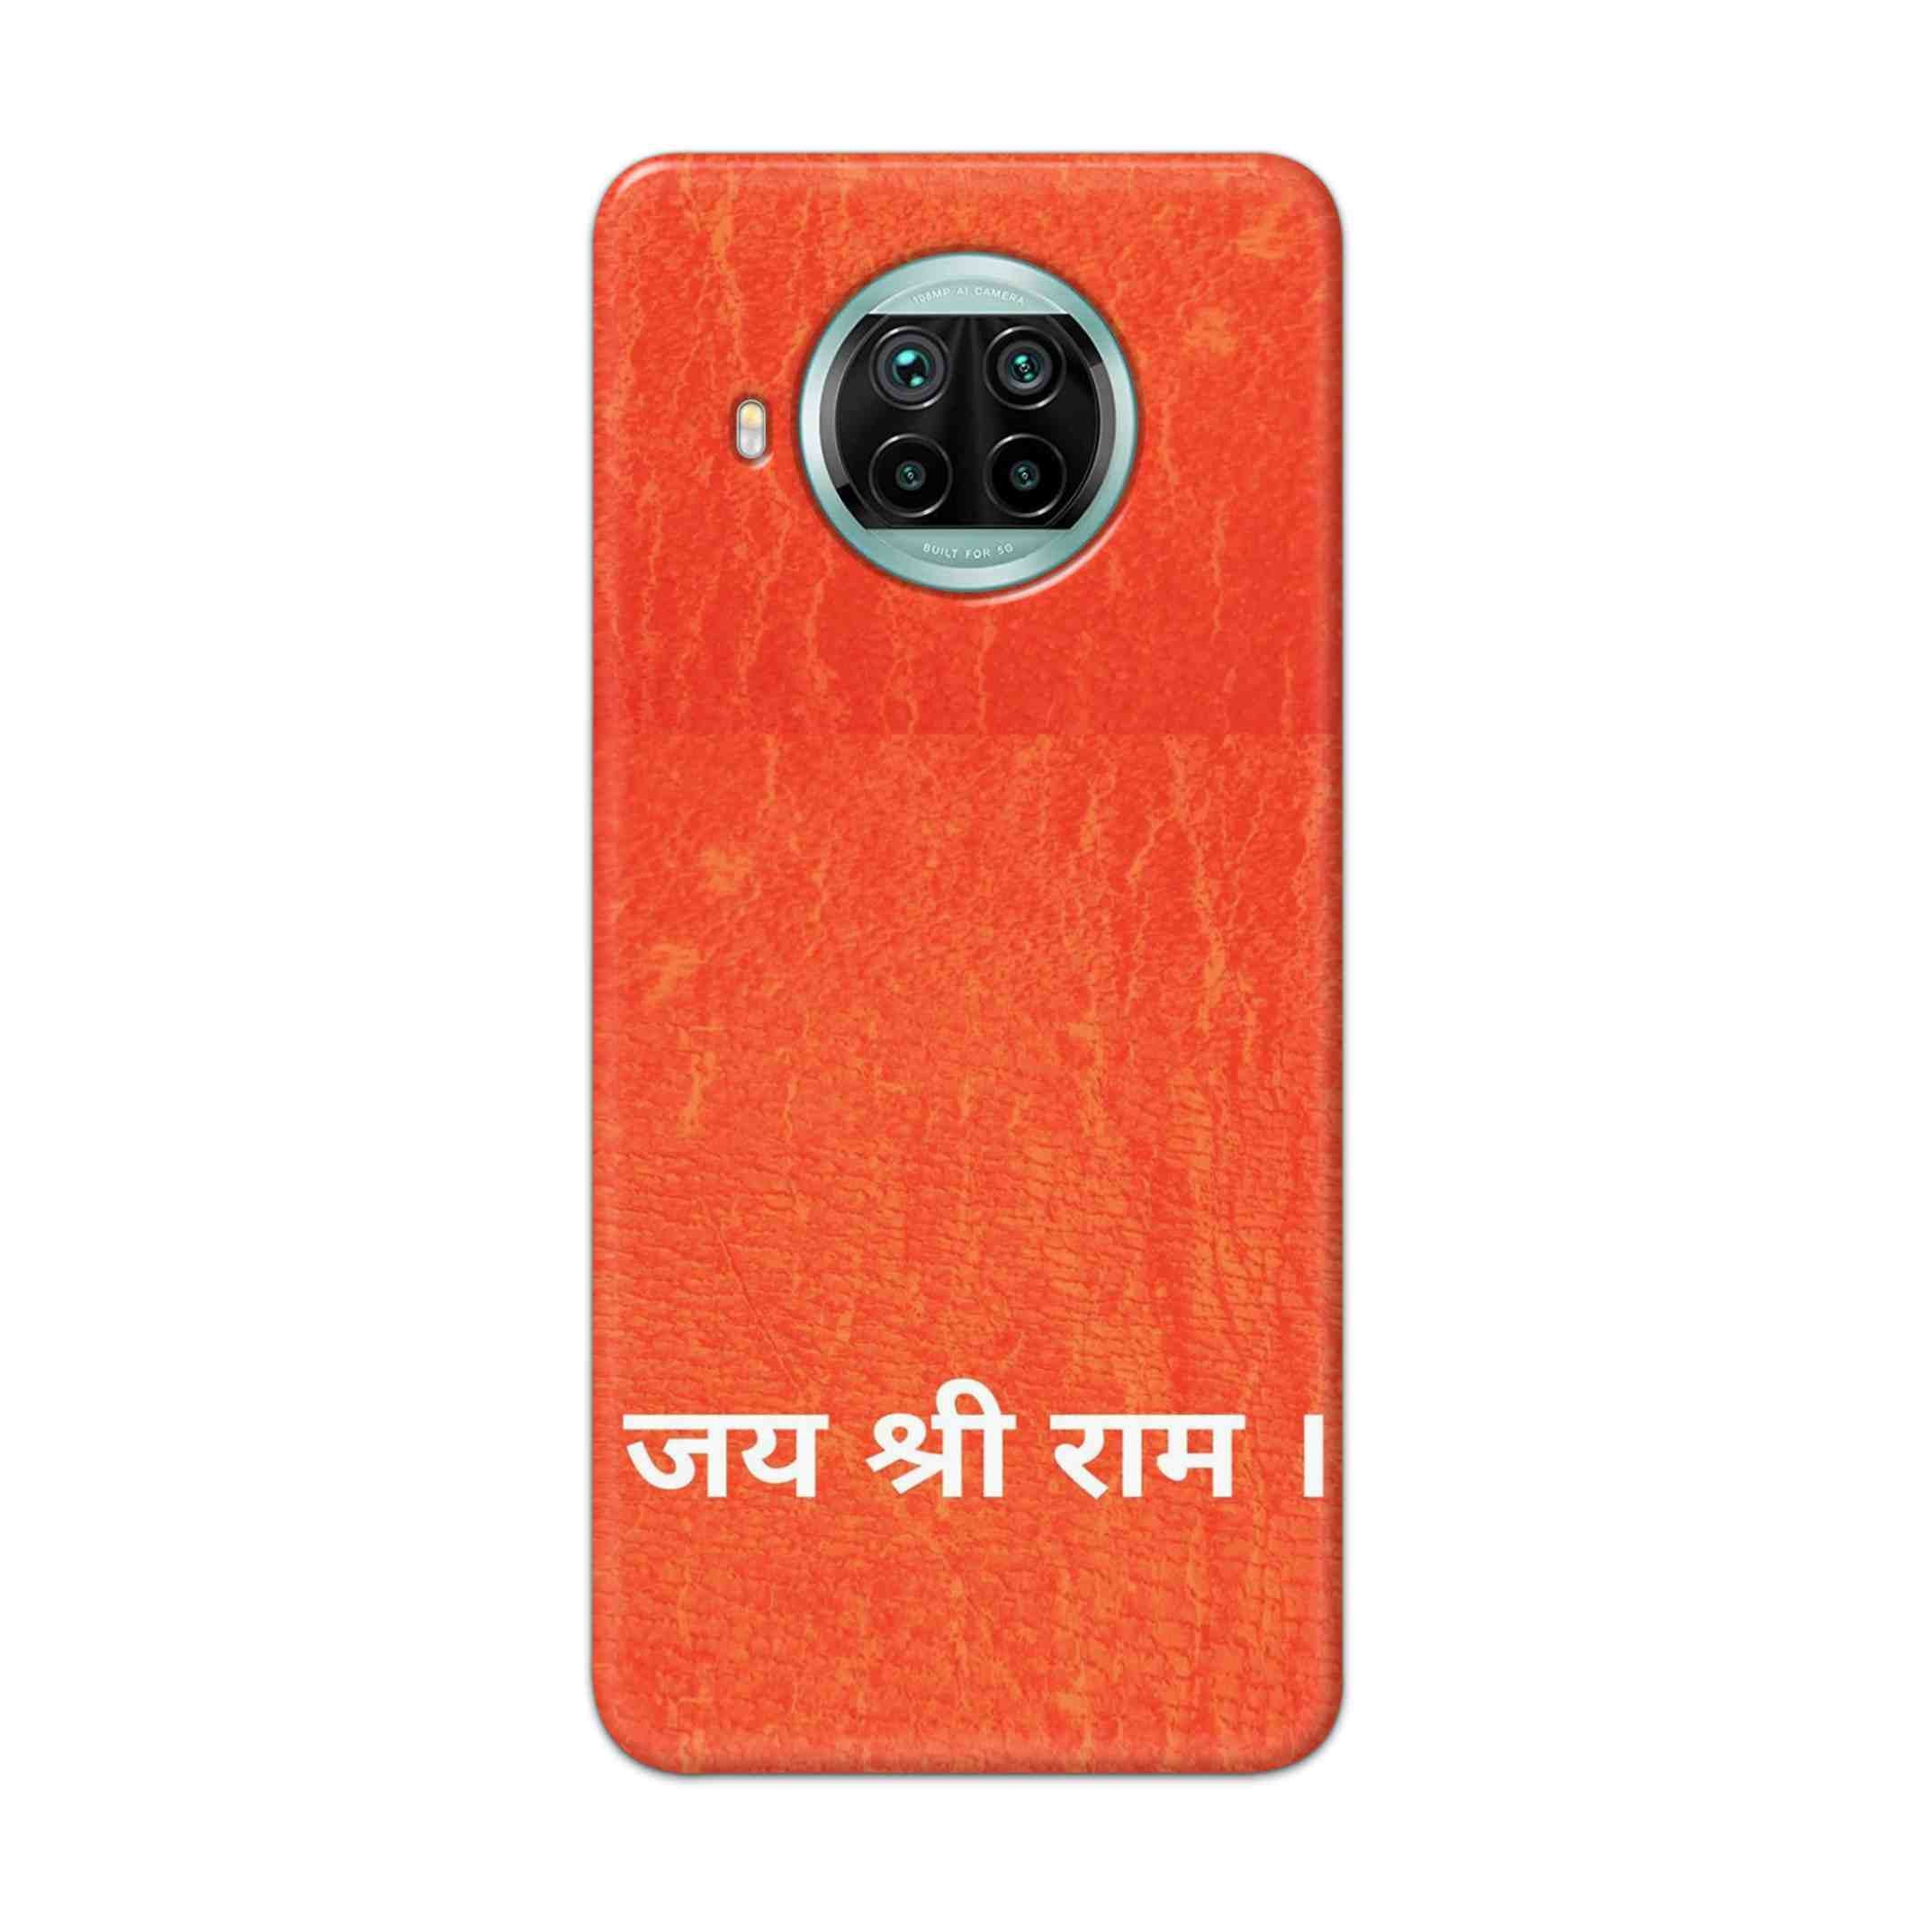 Buy Jai Shree Ram Hard Back Mobile Phone Case Cover For Xiaomi Mi 10i Online